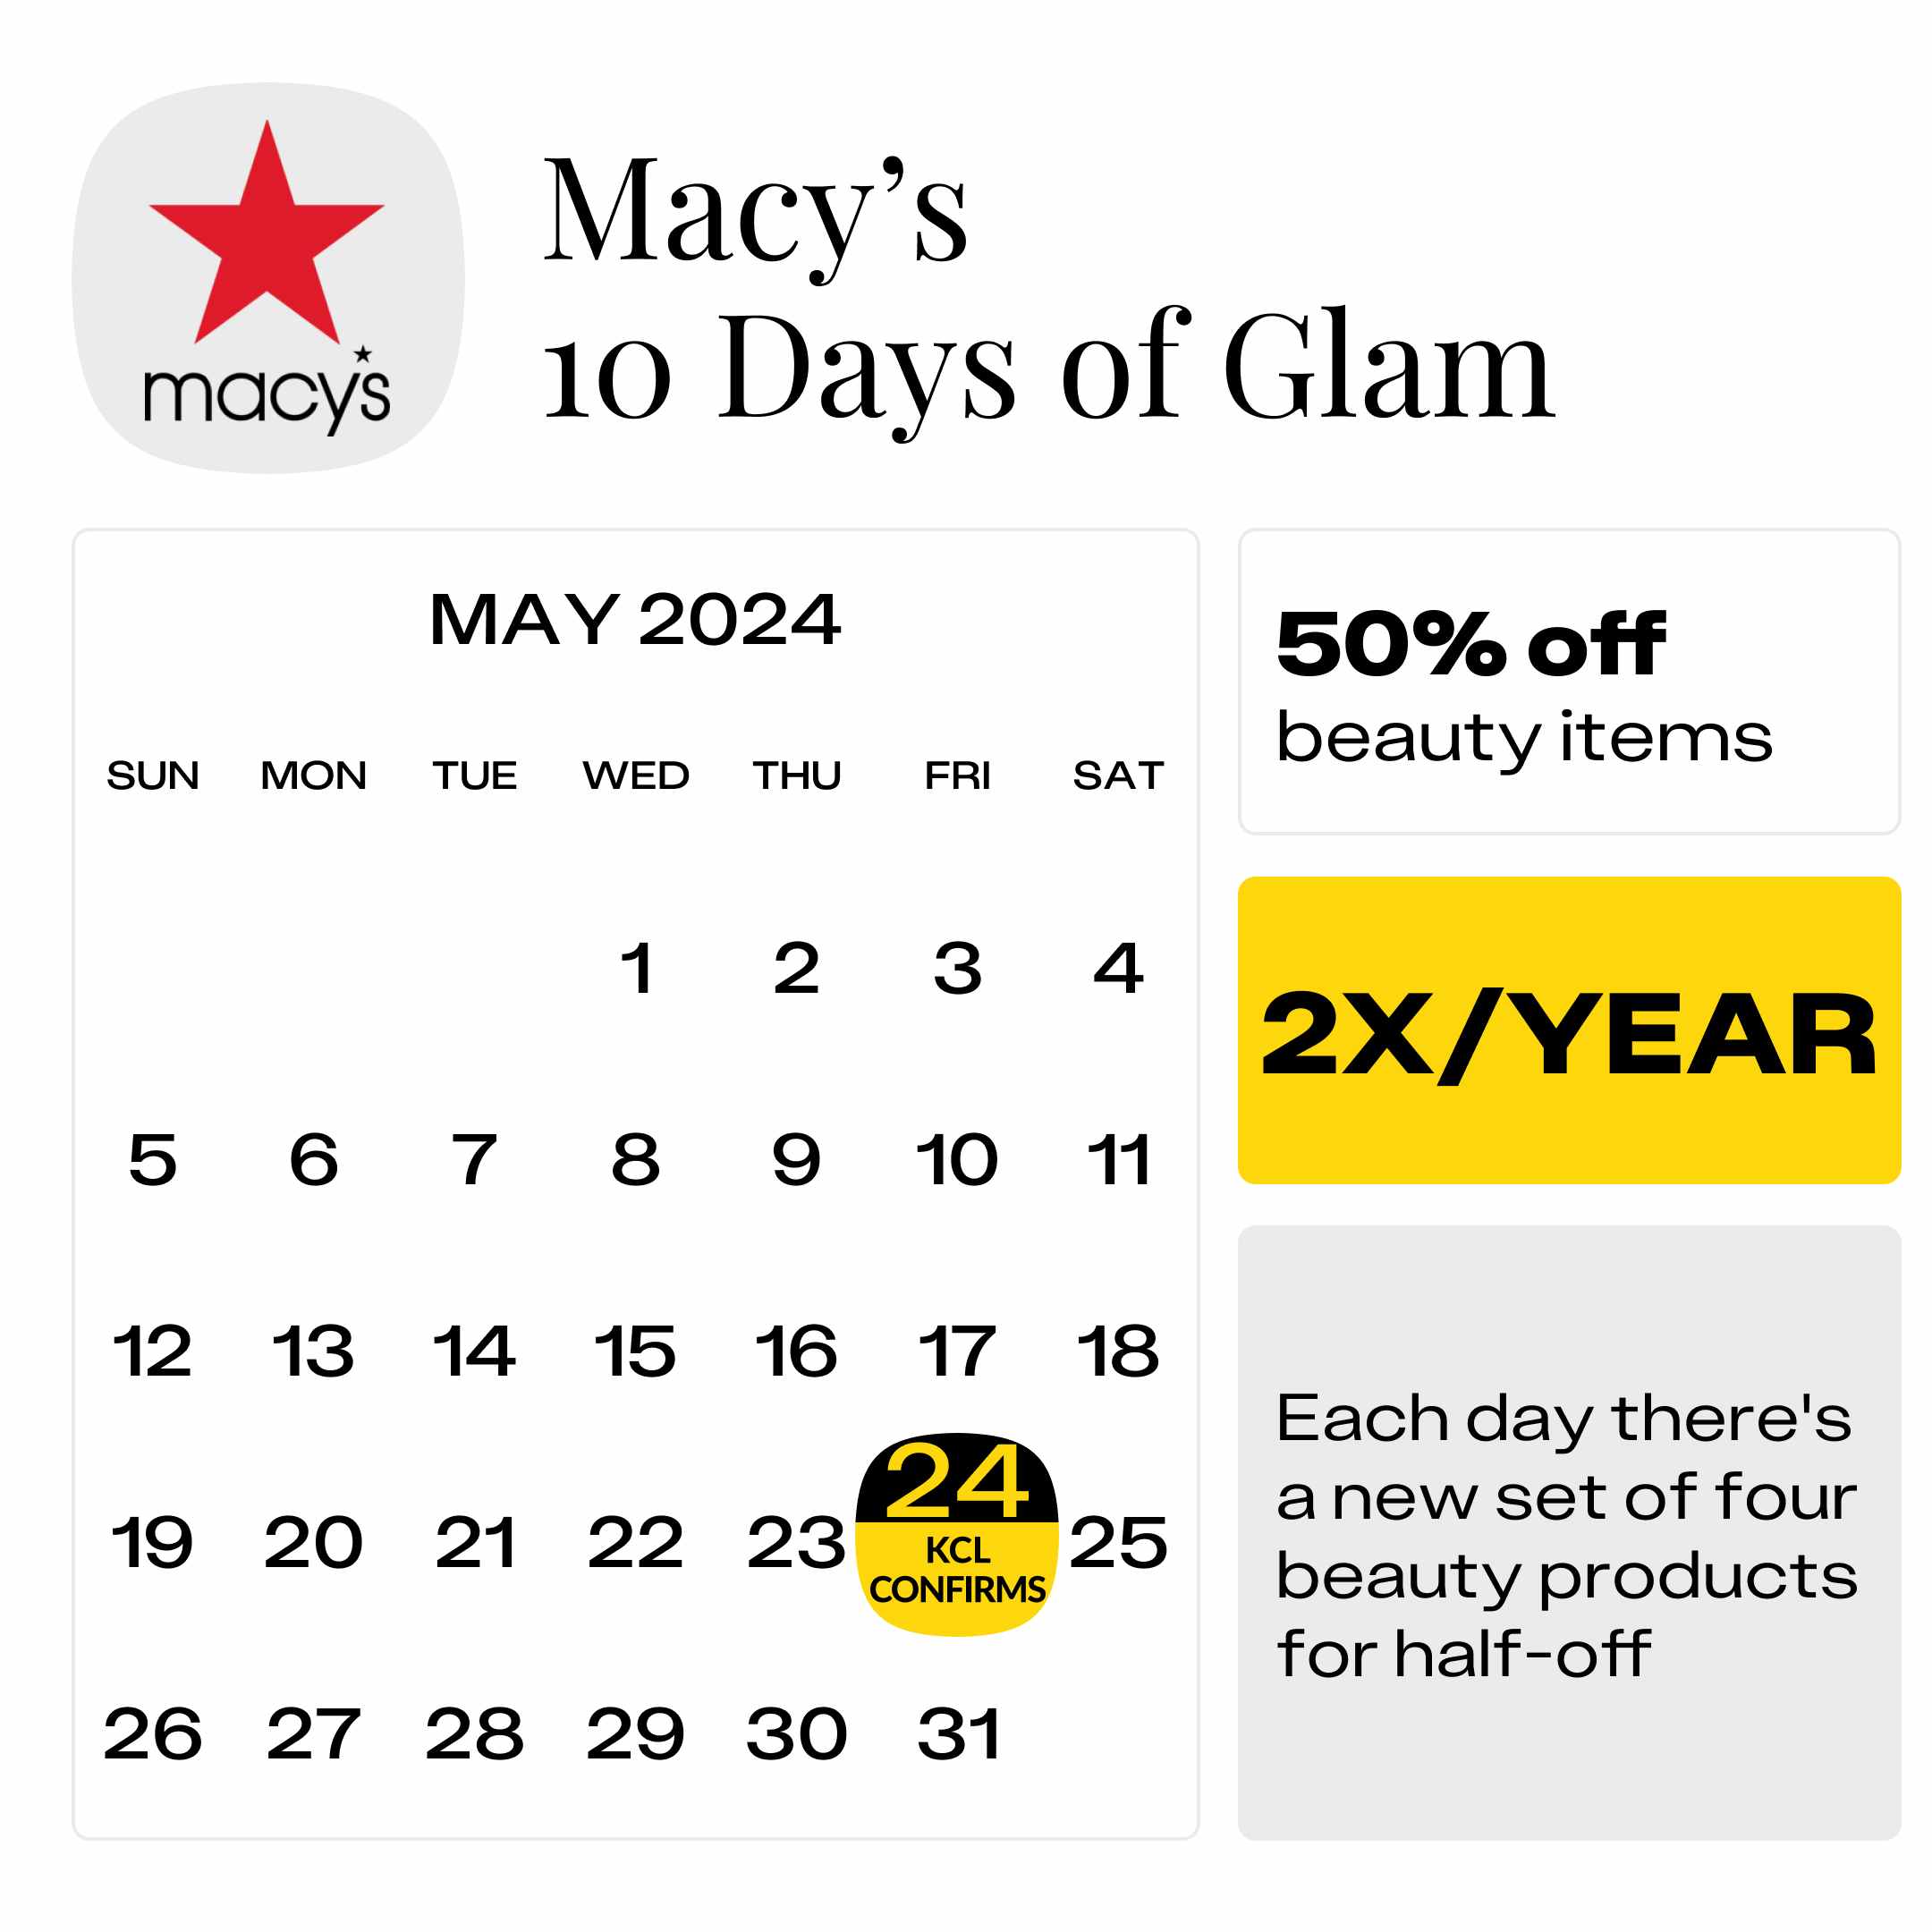 Macys-10-Days-of-Glam